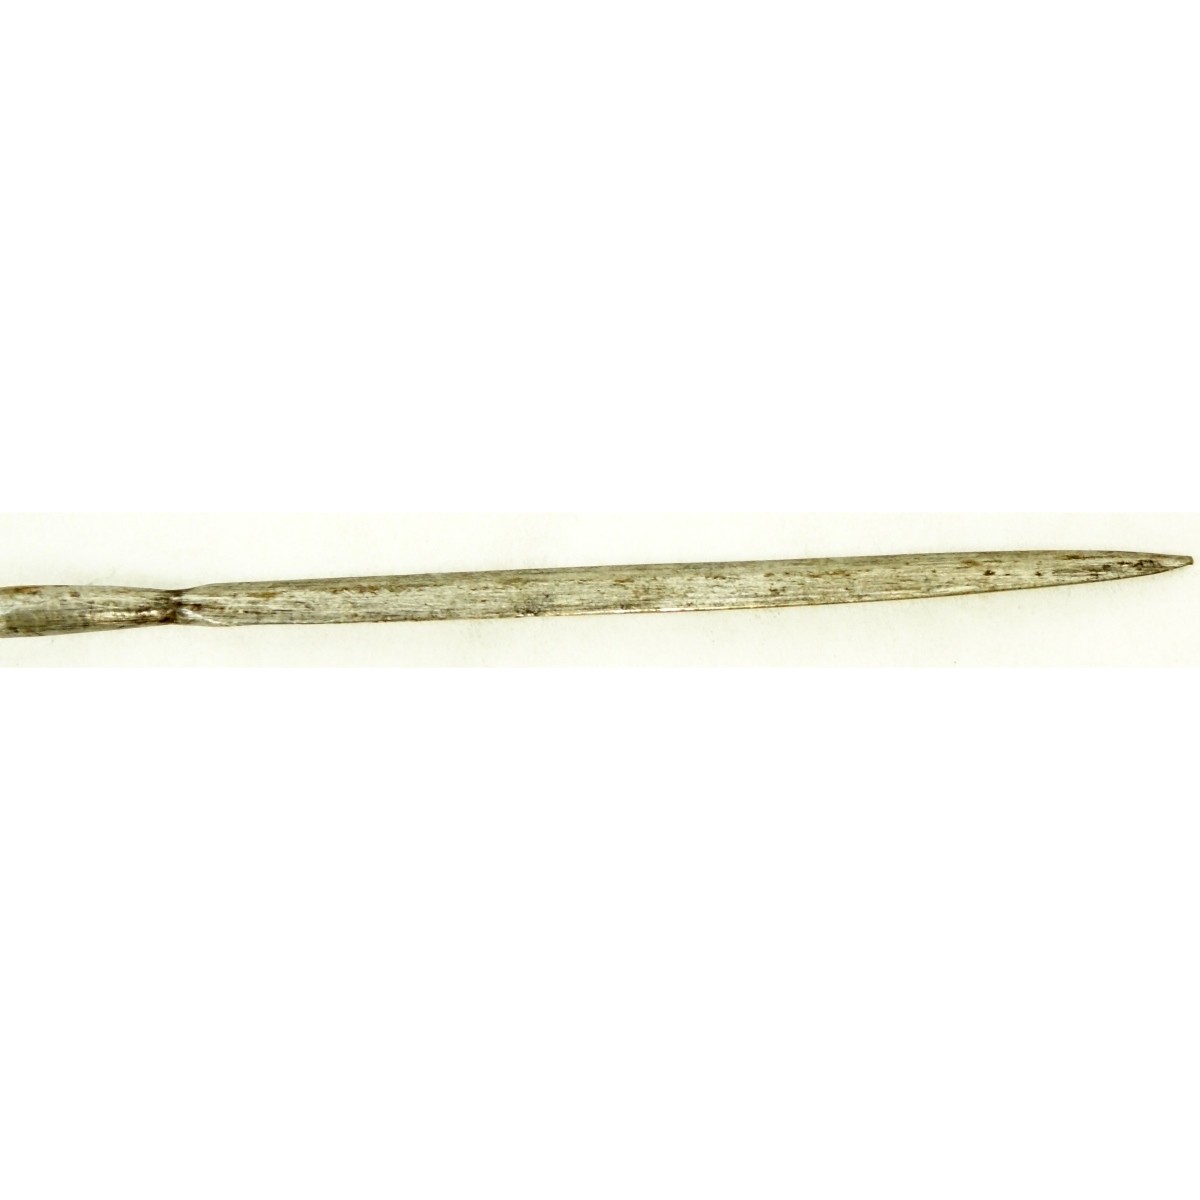 Antique Tibetan Polychrome Walking Stick